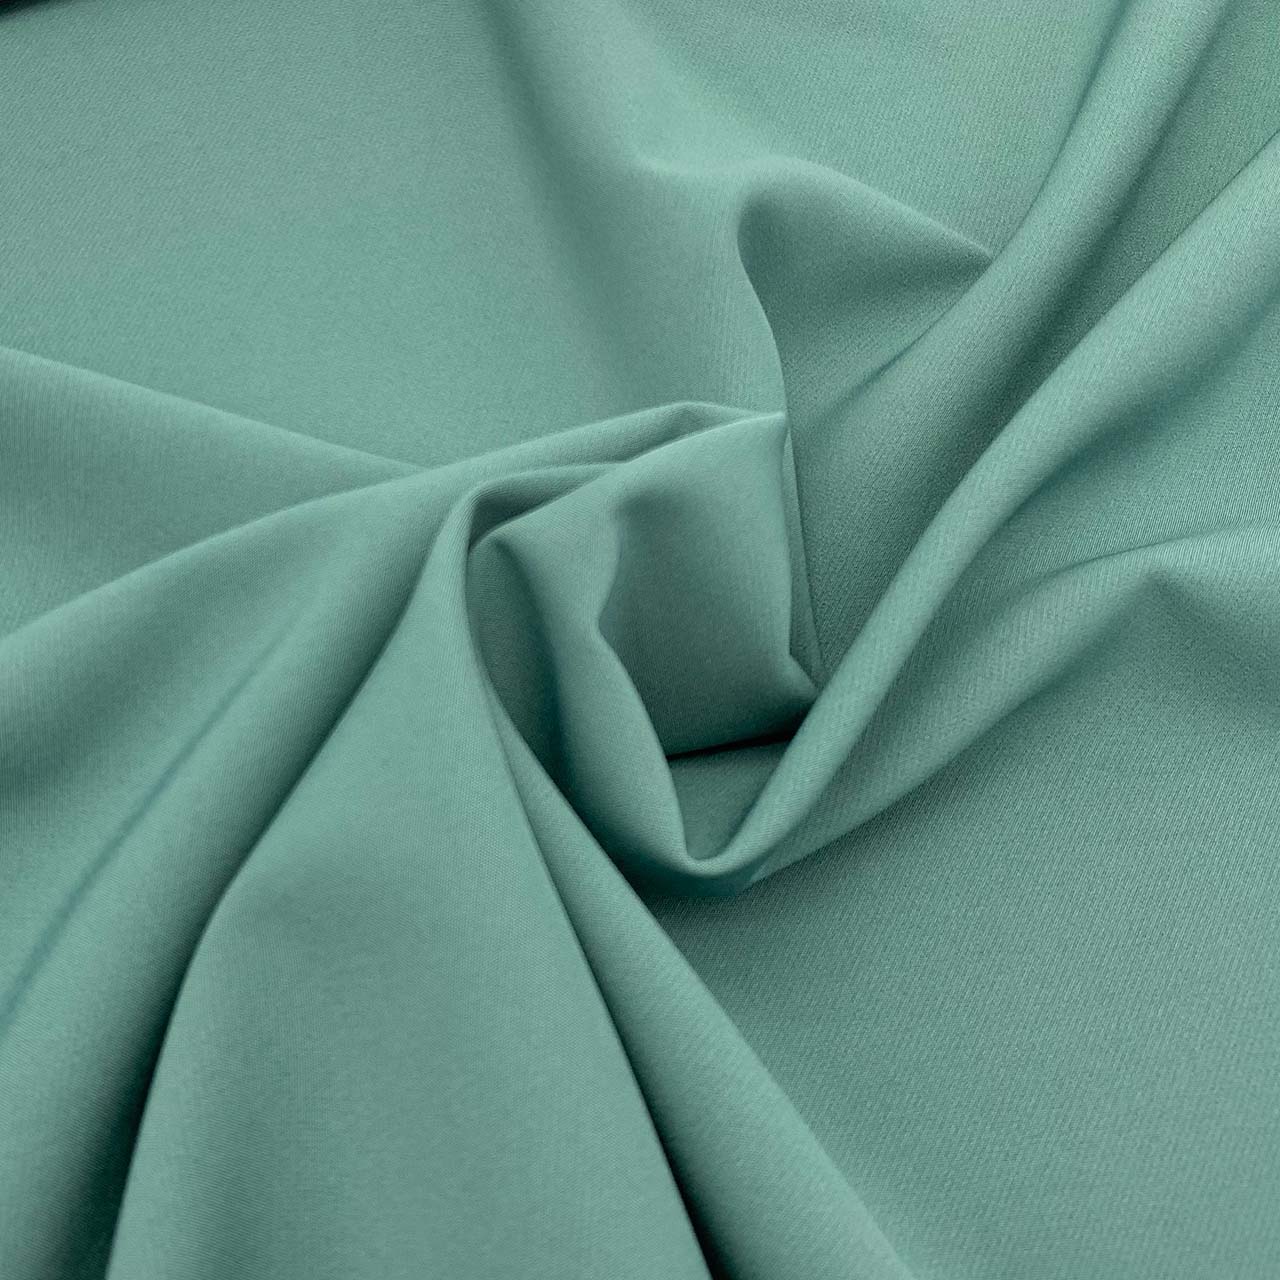 italian crepe fabric sage green crepe fabric collection